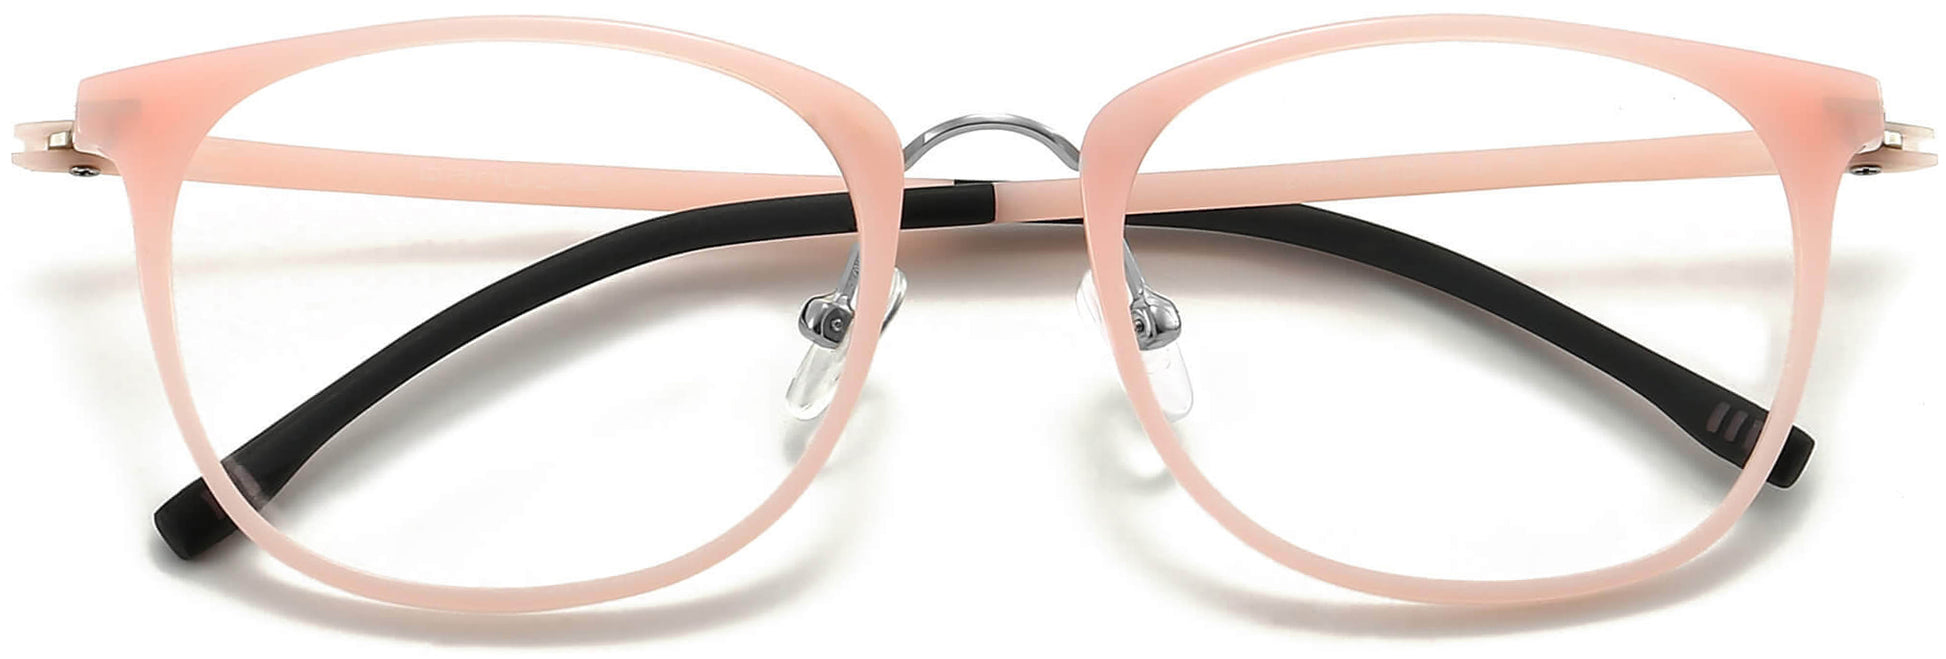 mullita pink Eyeglasses from ANRRI, closed view